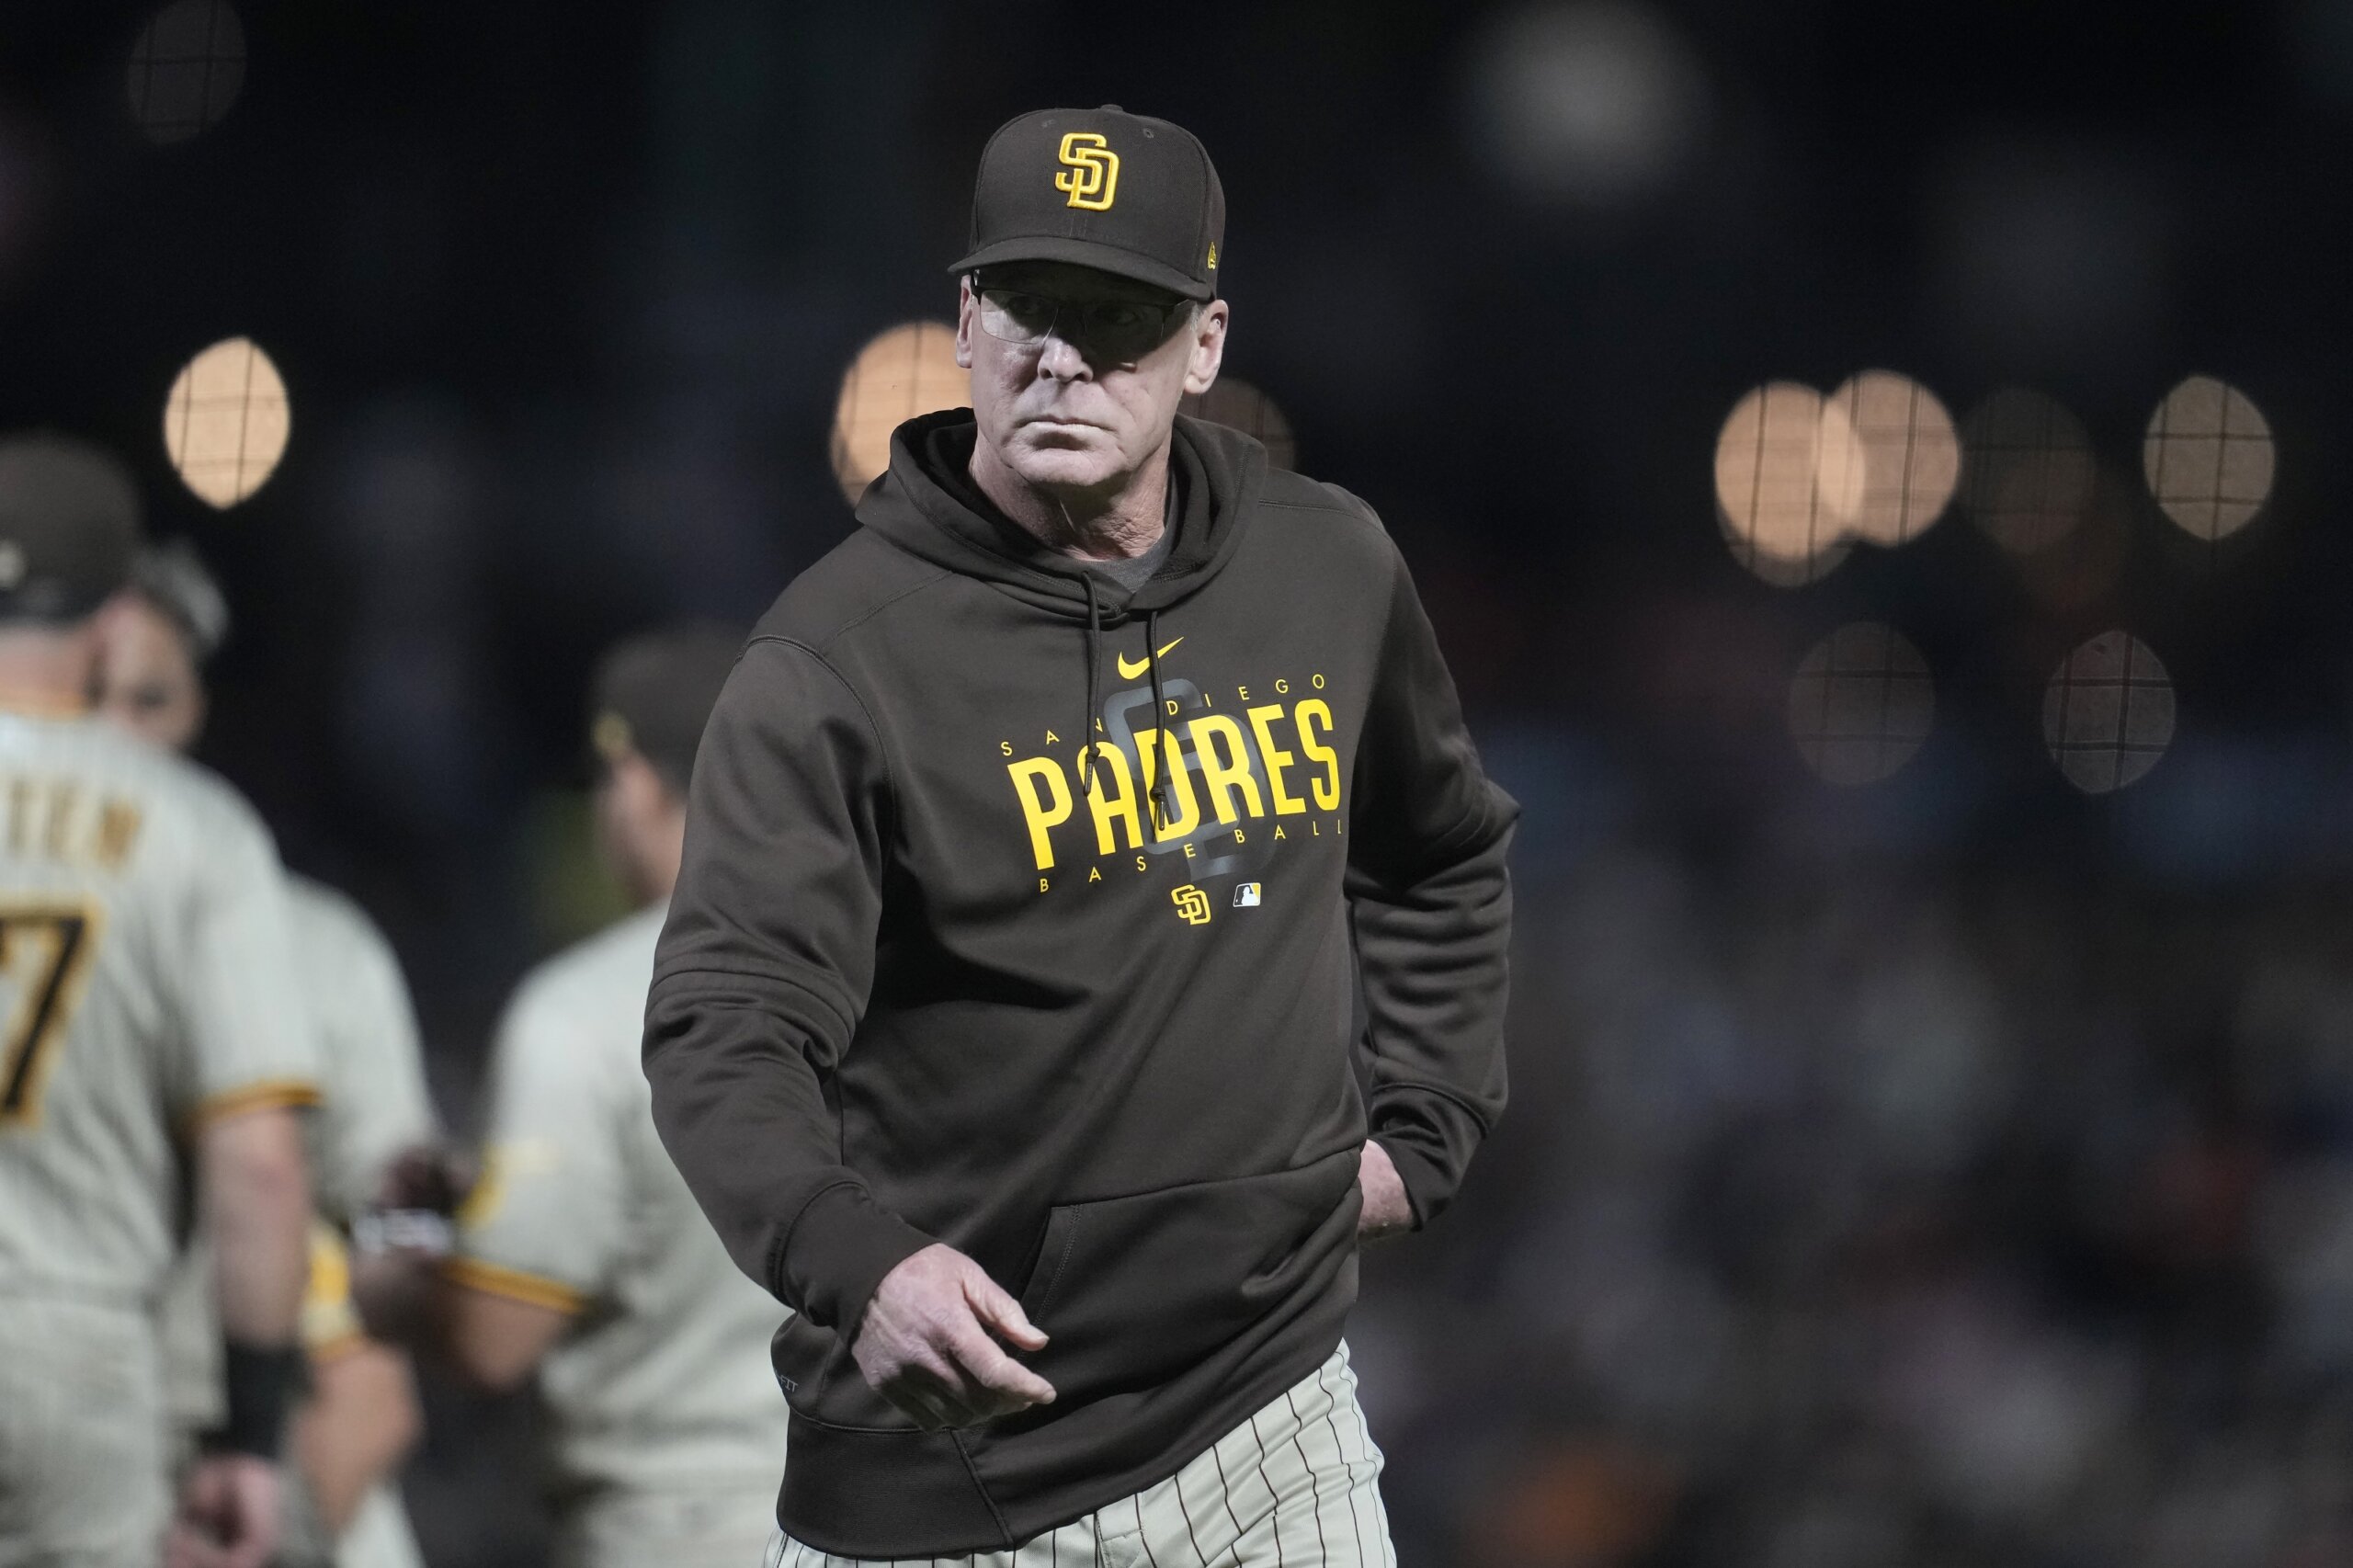 MLB News: Former MLB star and current San Diego Padres third base coach Matt  Williams is facing divorce